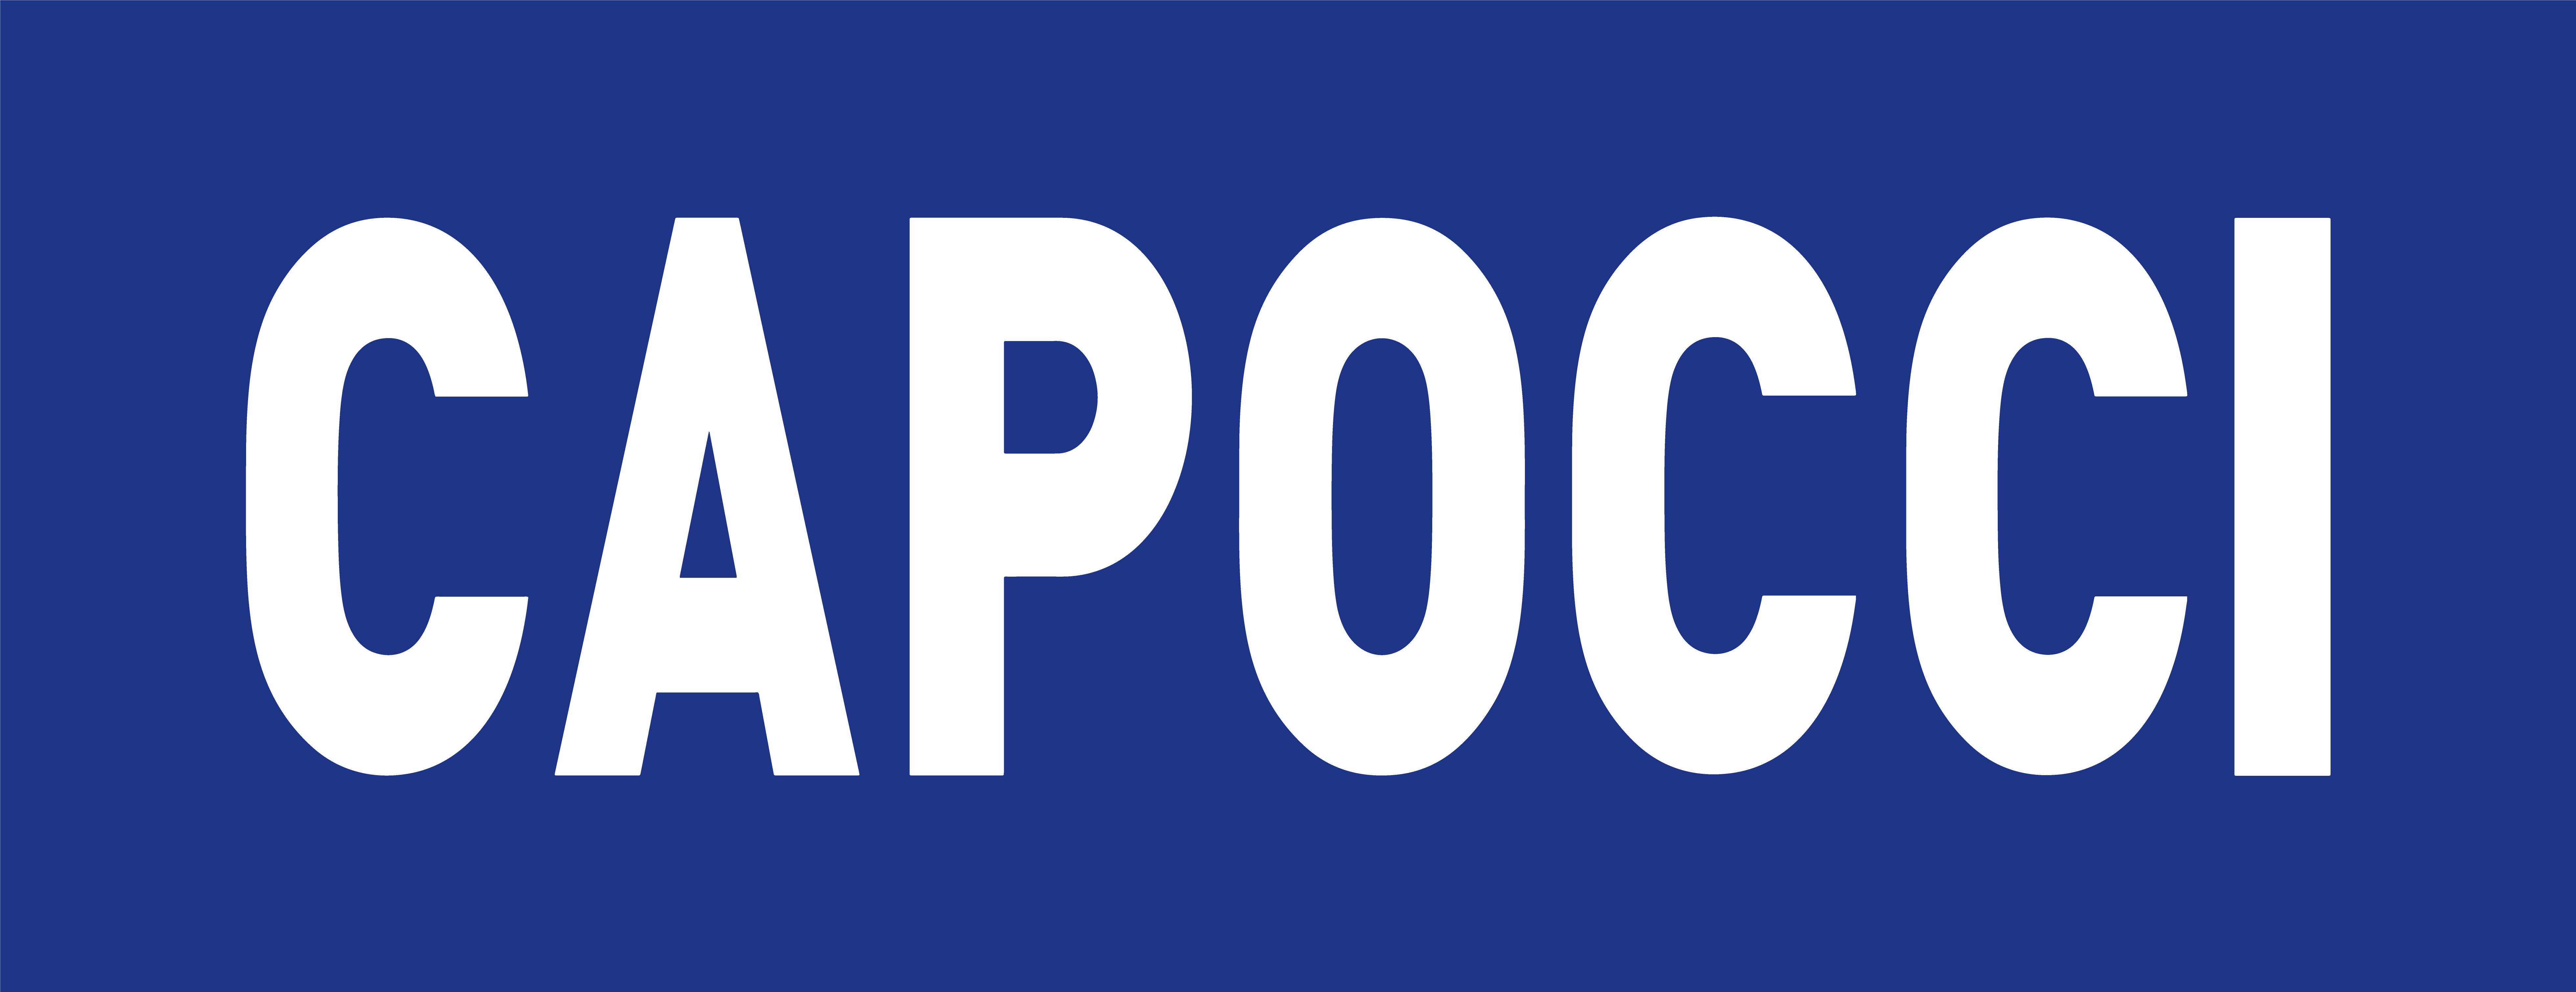 Logo exposant CAPOCCI